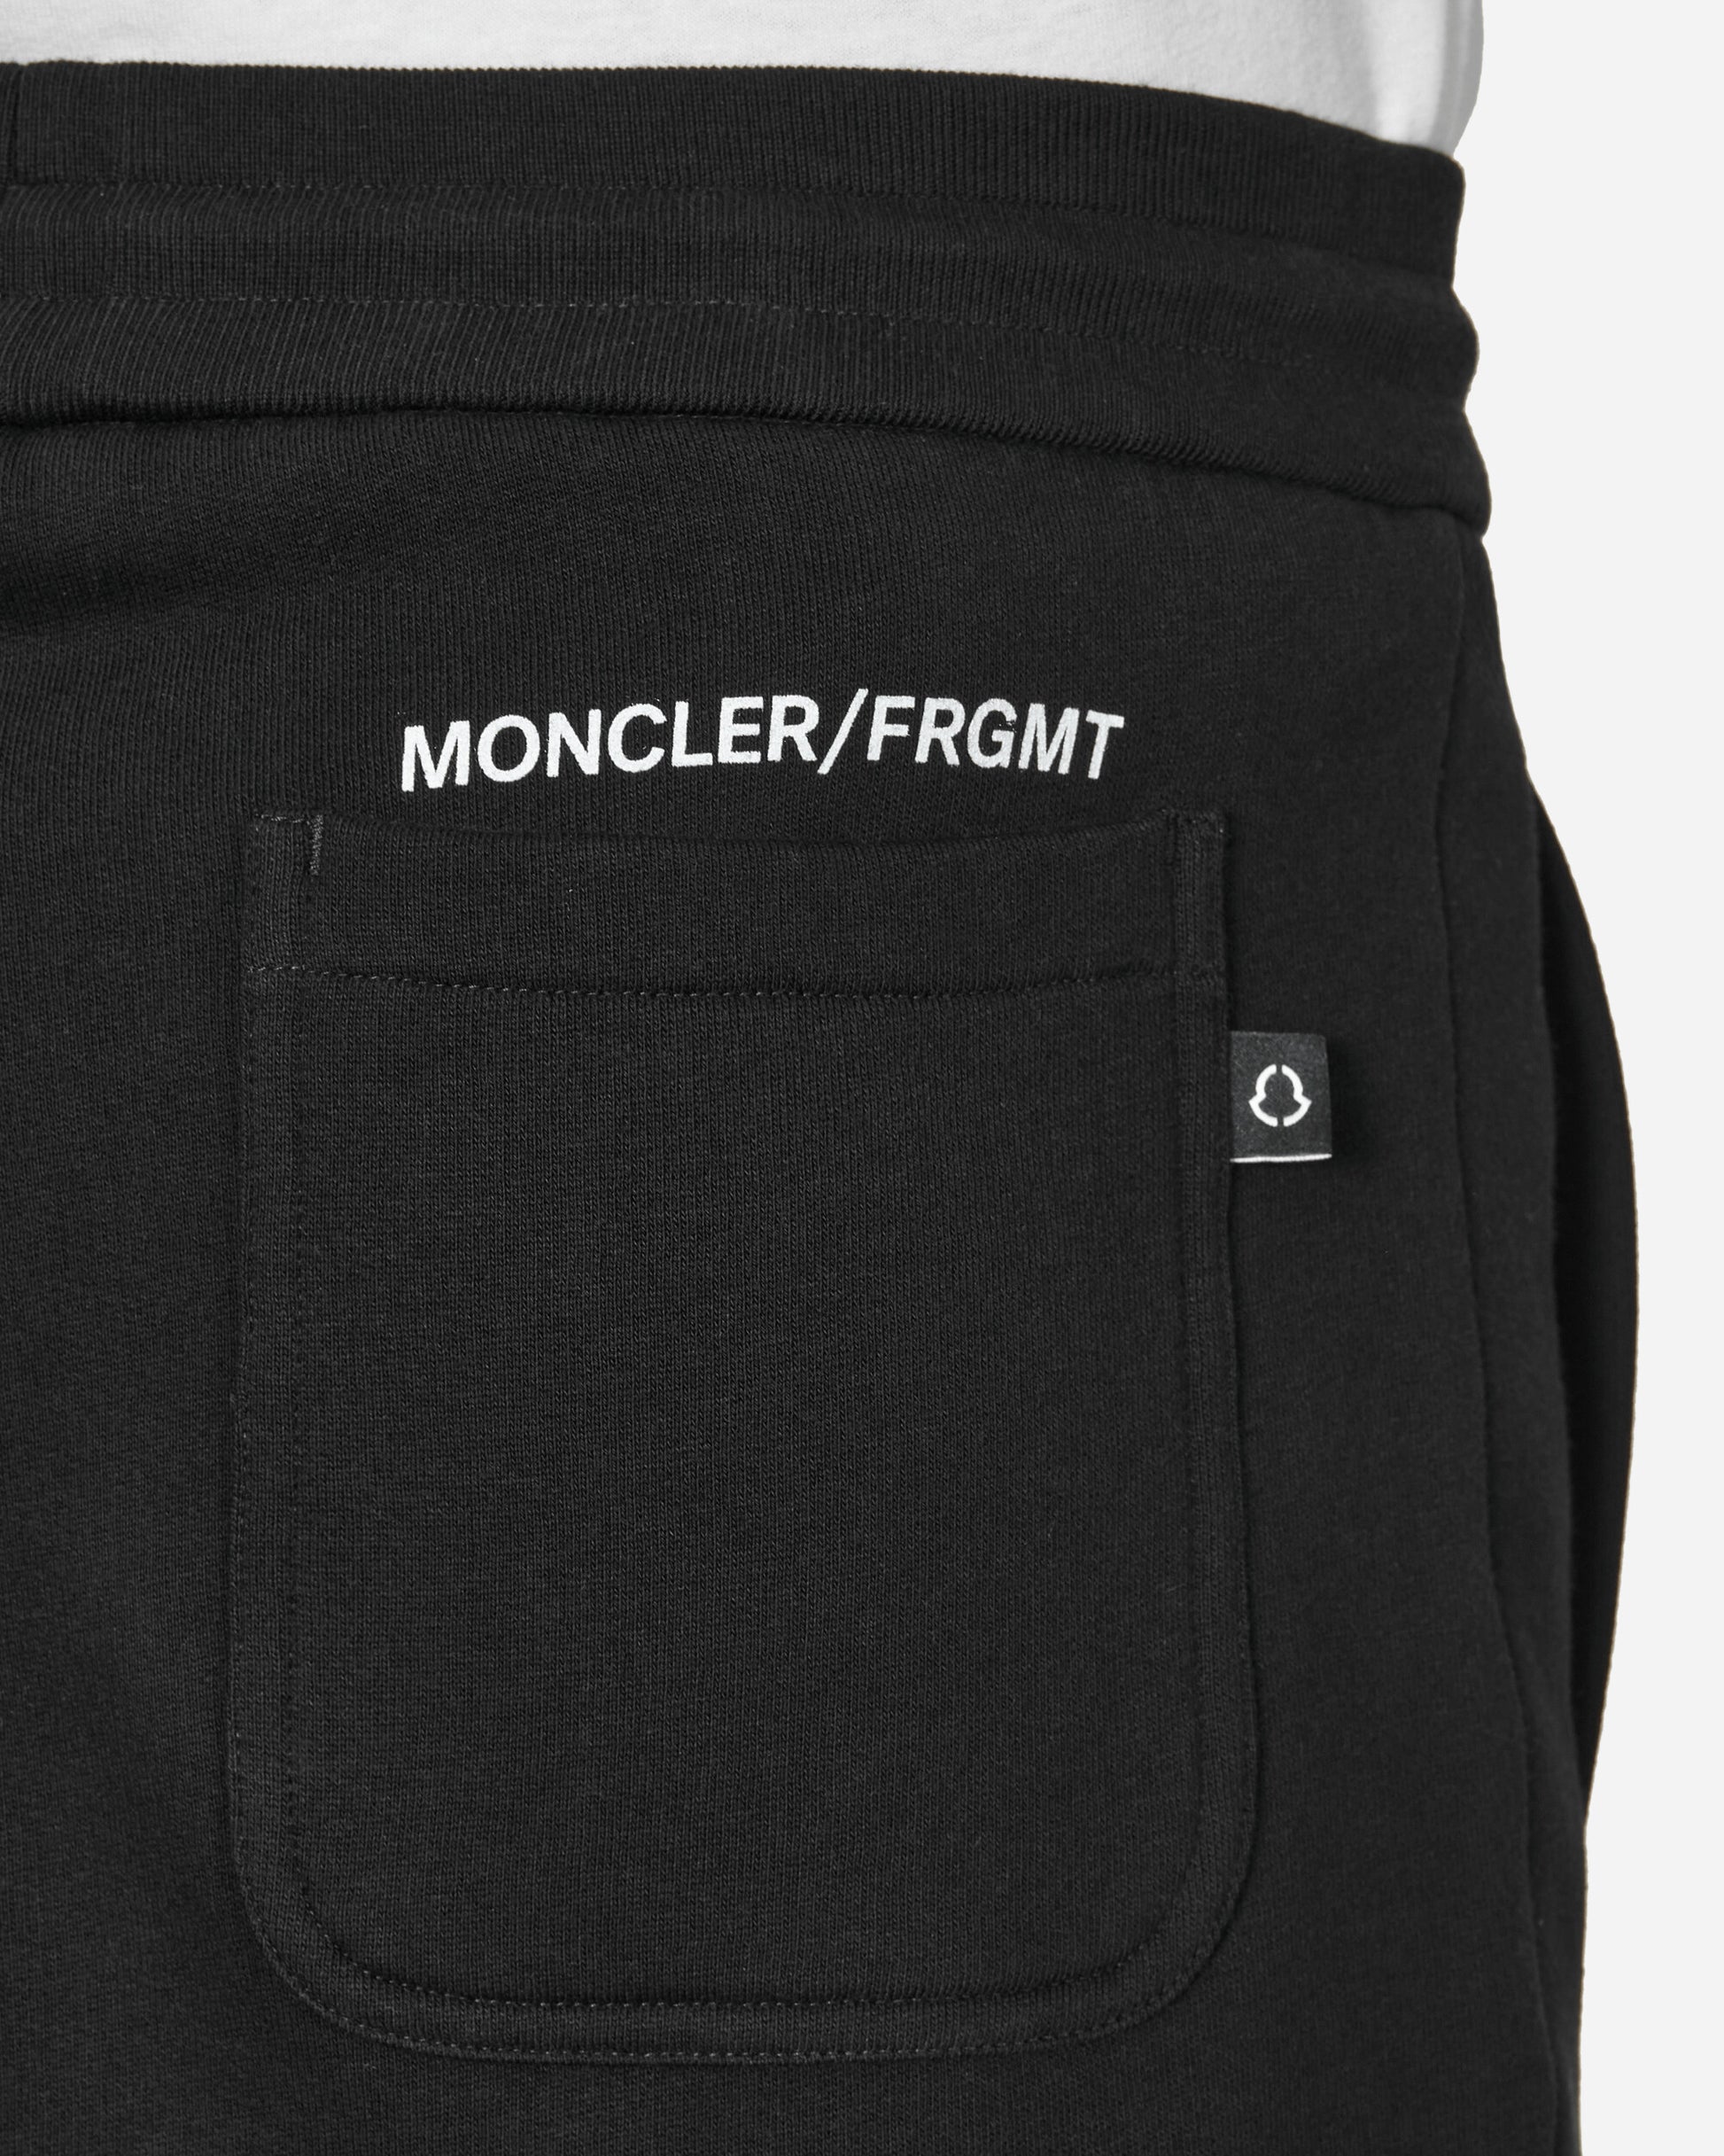 Moncler Genius Jersey Bottom X Fragment Black Shorts Sweatshorts 8H00003M2372 999